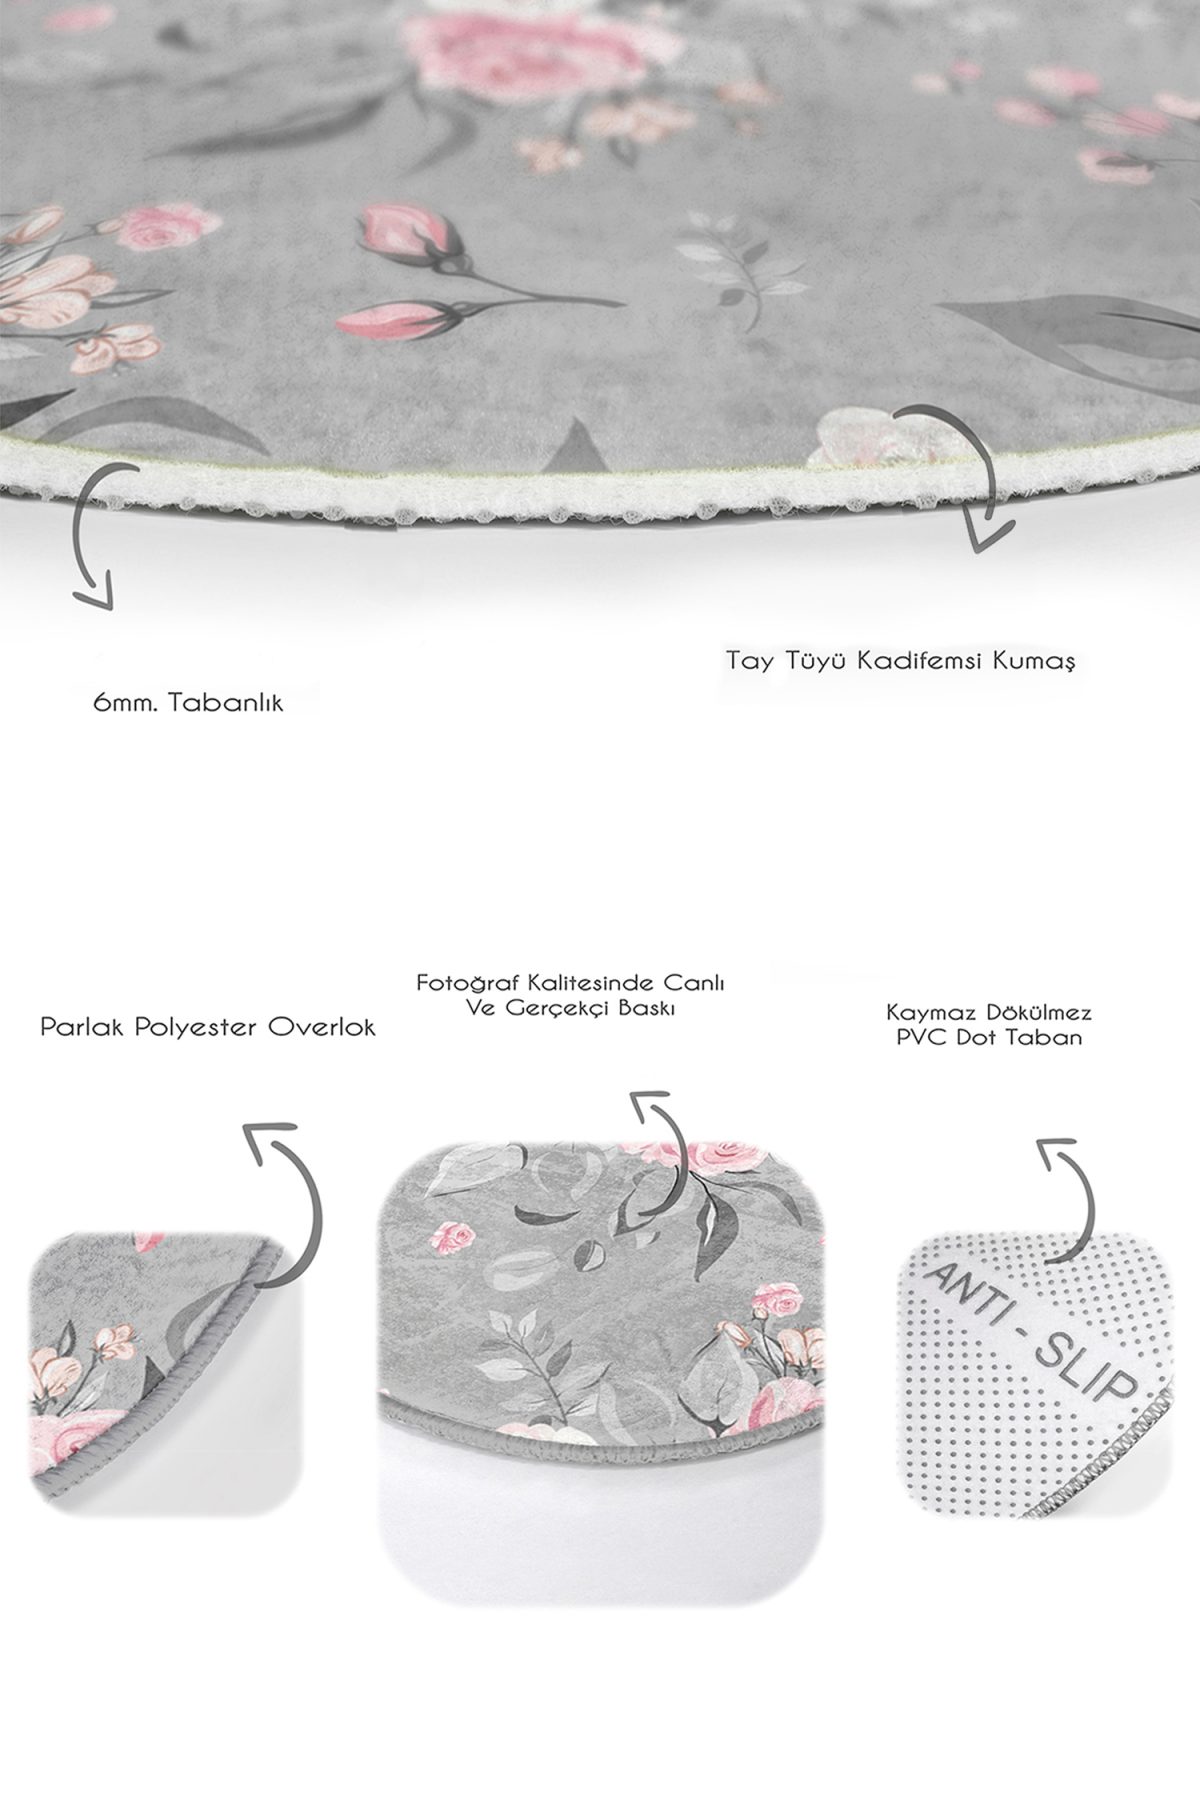 Gri & Pembe Zemin Gül Özel Tasarımlı 2'li Oval Kaymaz Tabanlı Banyo & Mutfak Paspas Takımı Realhomes